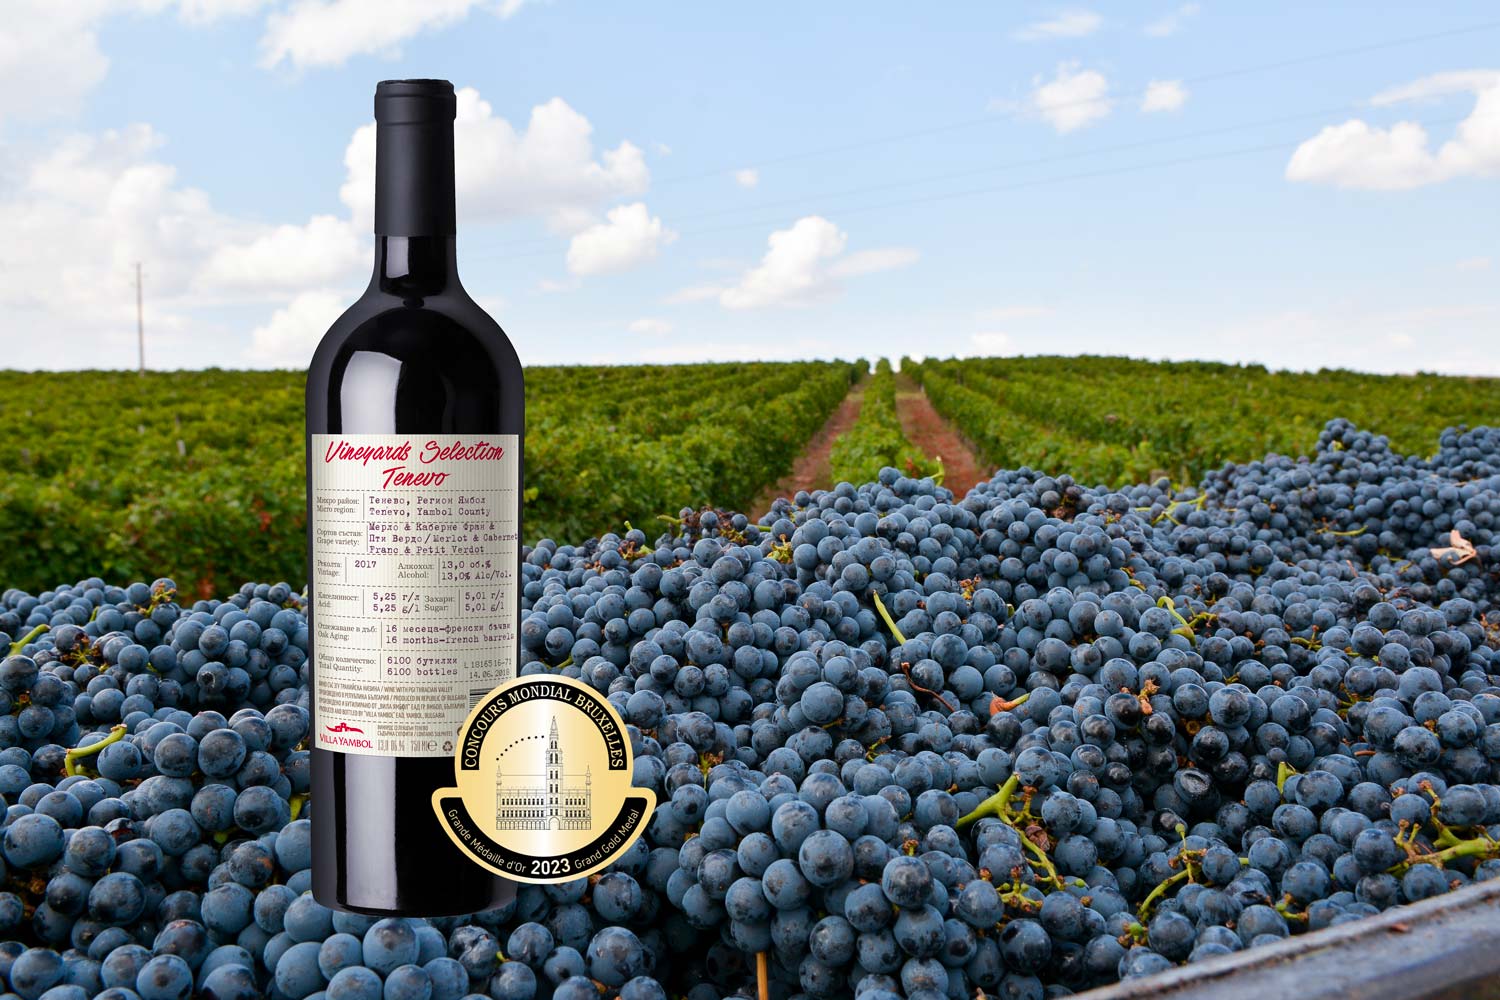 Le vin bulgare « Vineyards Selection Tenevo 2017 » remporte la Révélation internationale